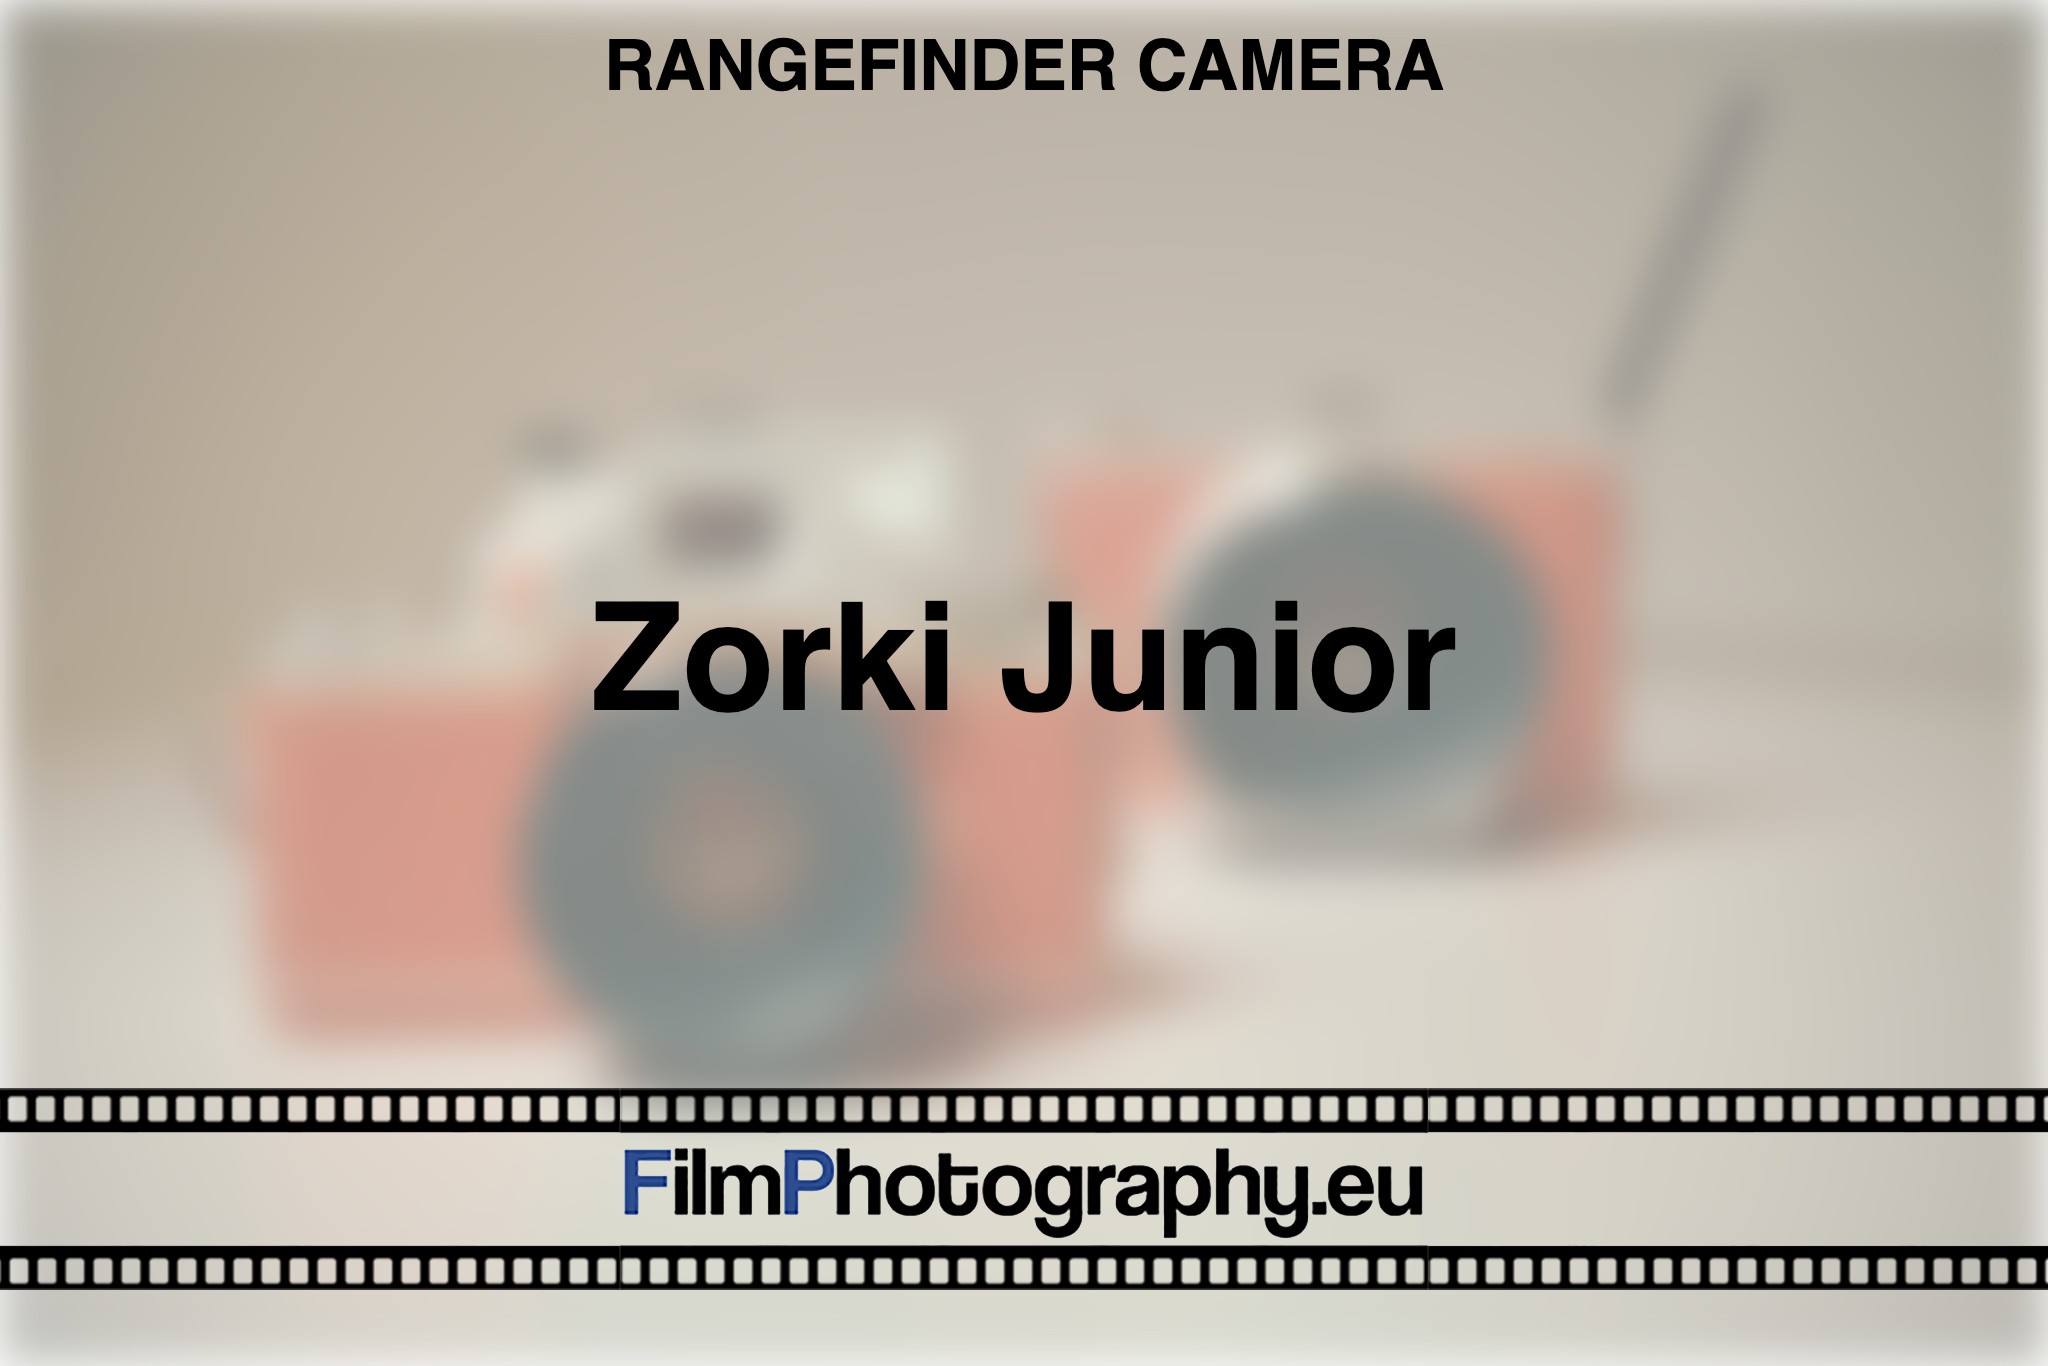 zorki-junior-rangefinder-camera-bnv